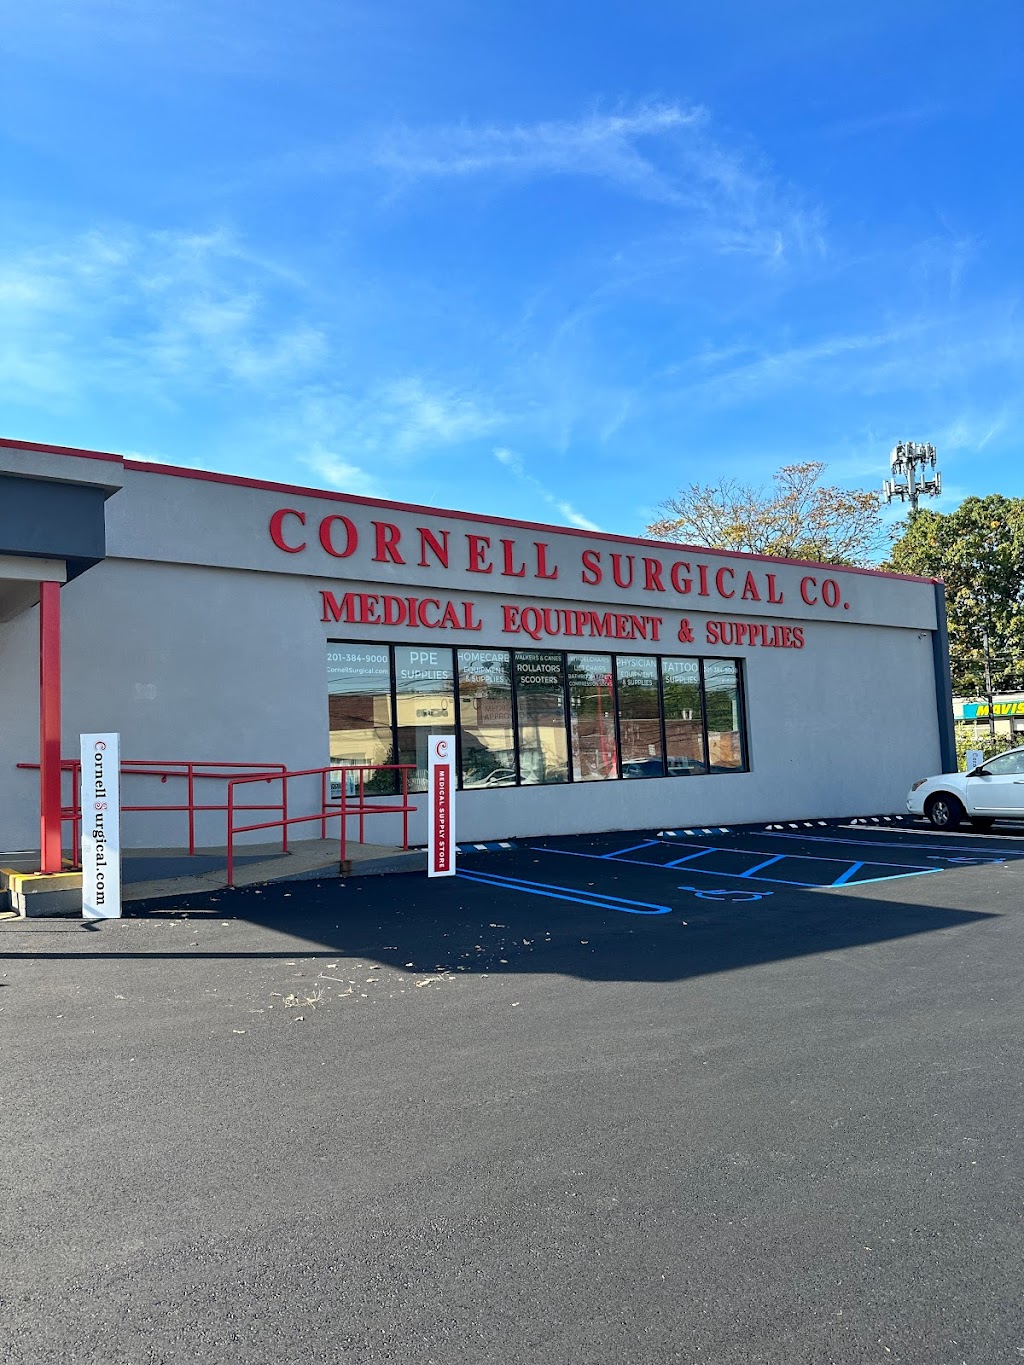 Cornell Surgical Co. | 30 New Bridge Rd, Bergenfield, NJ 07621 | Phone: (201) 384-9000